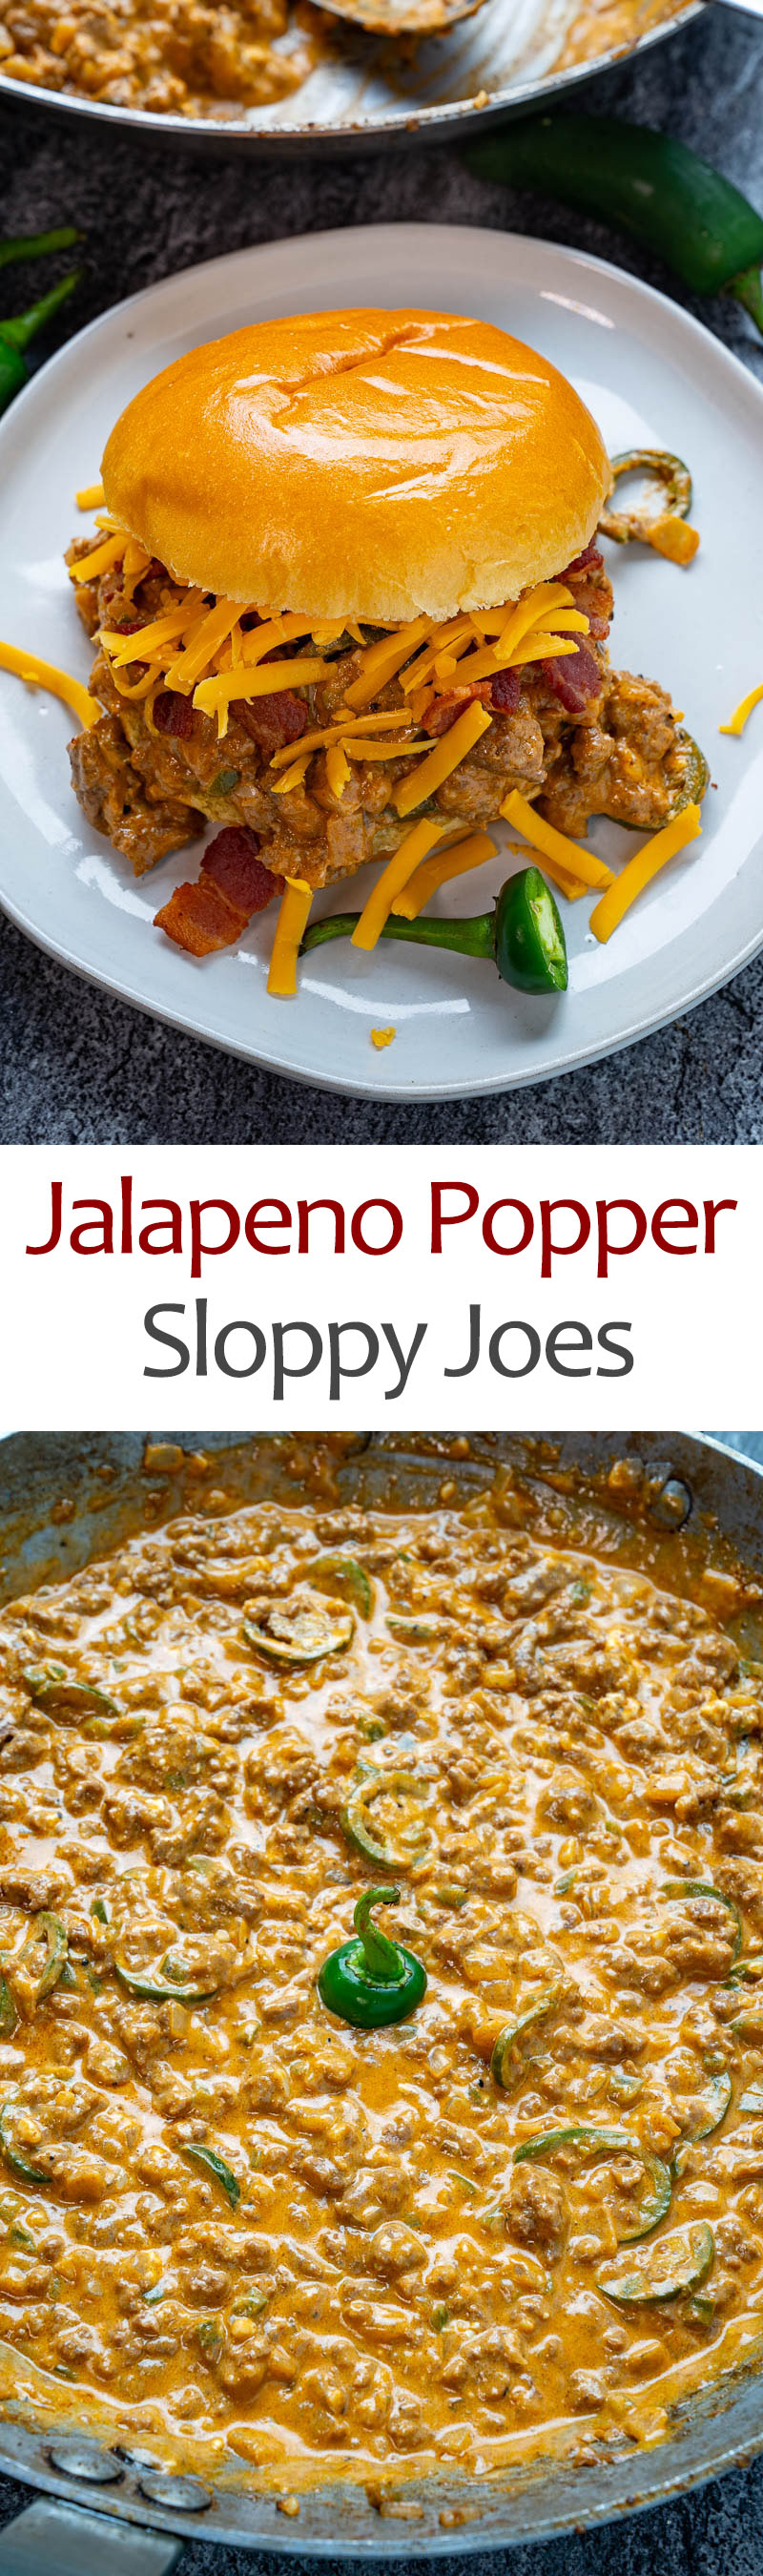 Jalapeno Popper Sloppy Joes